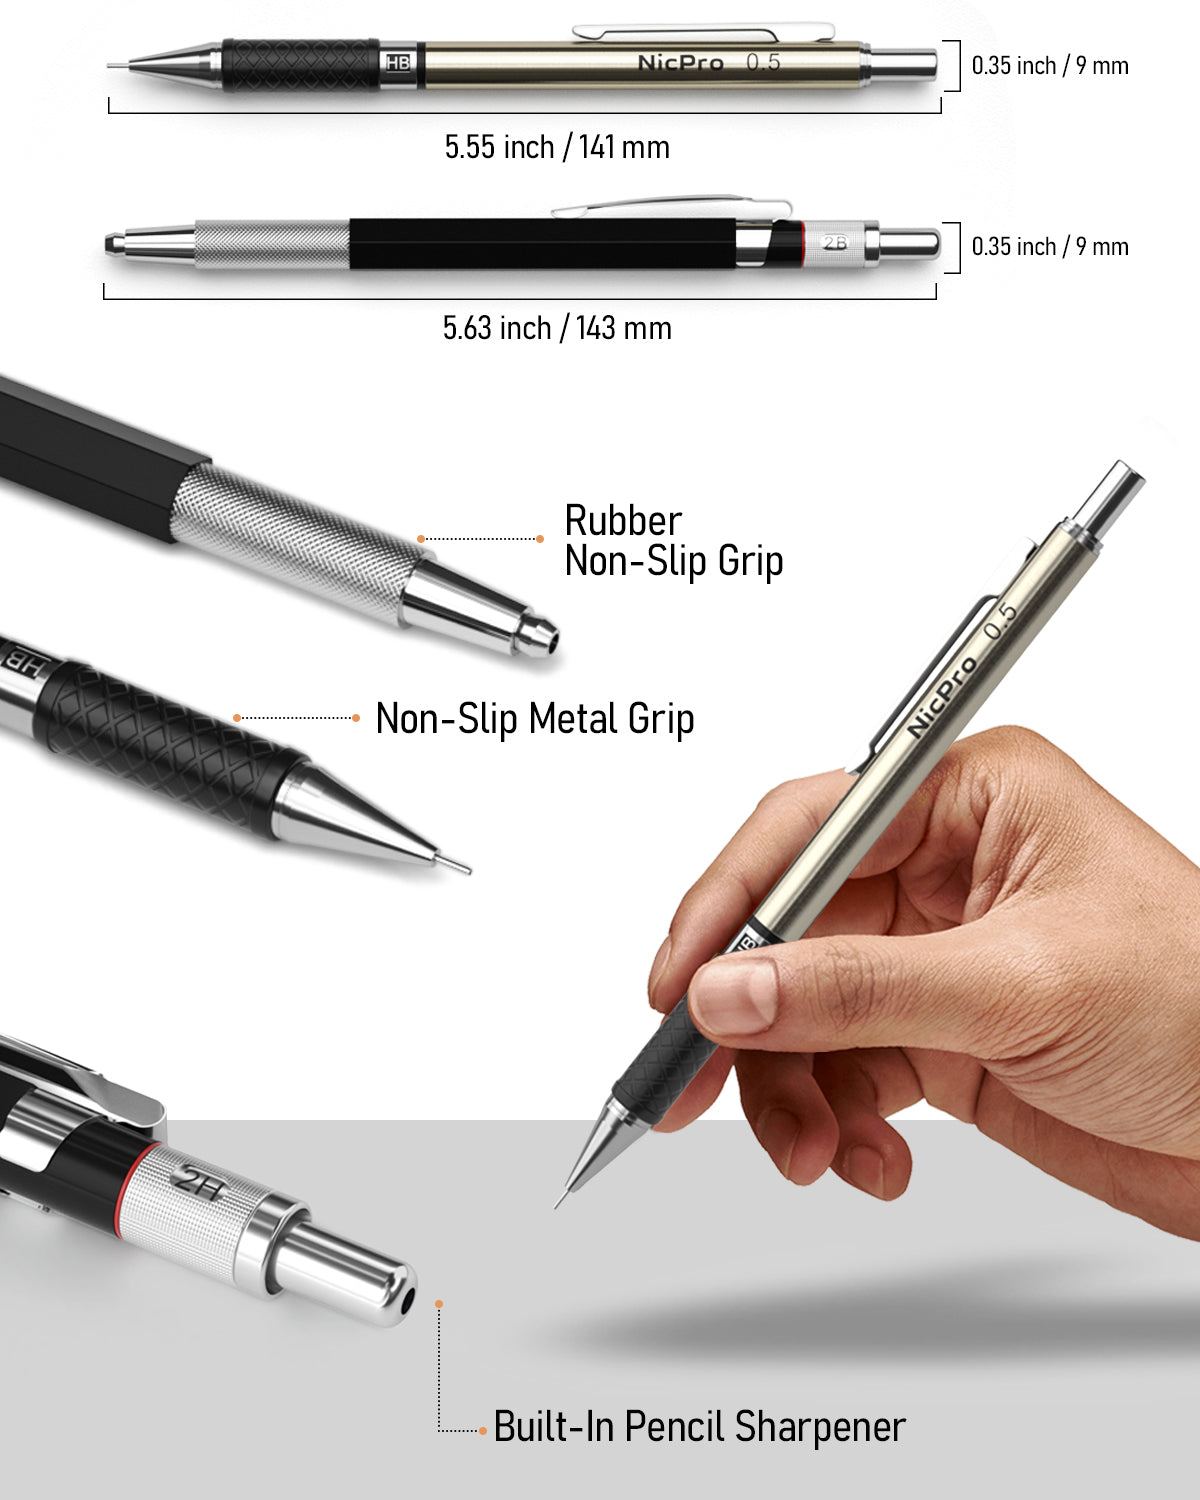 12 PCS/LOT Art Pencils Graphite Shading Pencils For Beginners & Pro  Artists,Professional Drawing Sketching Pencil Set